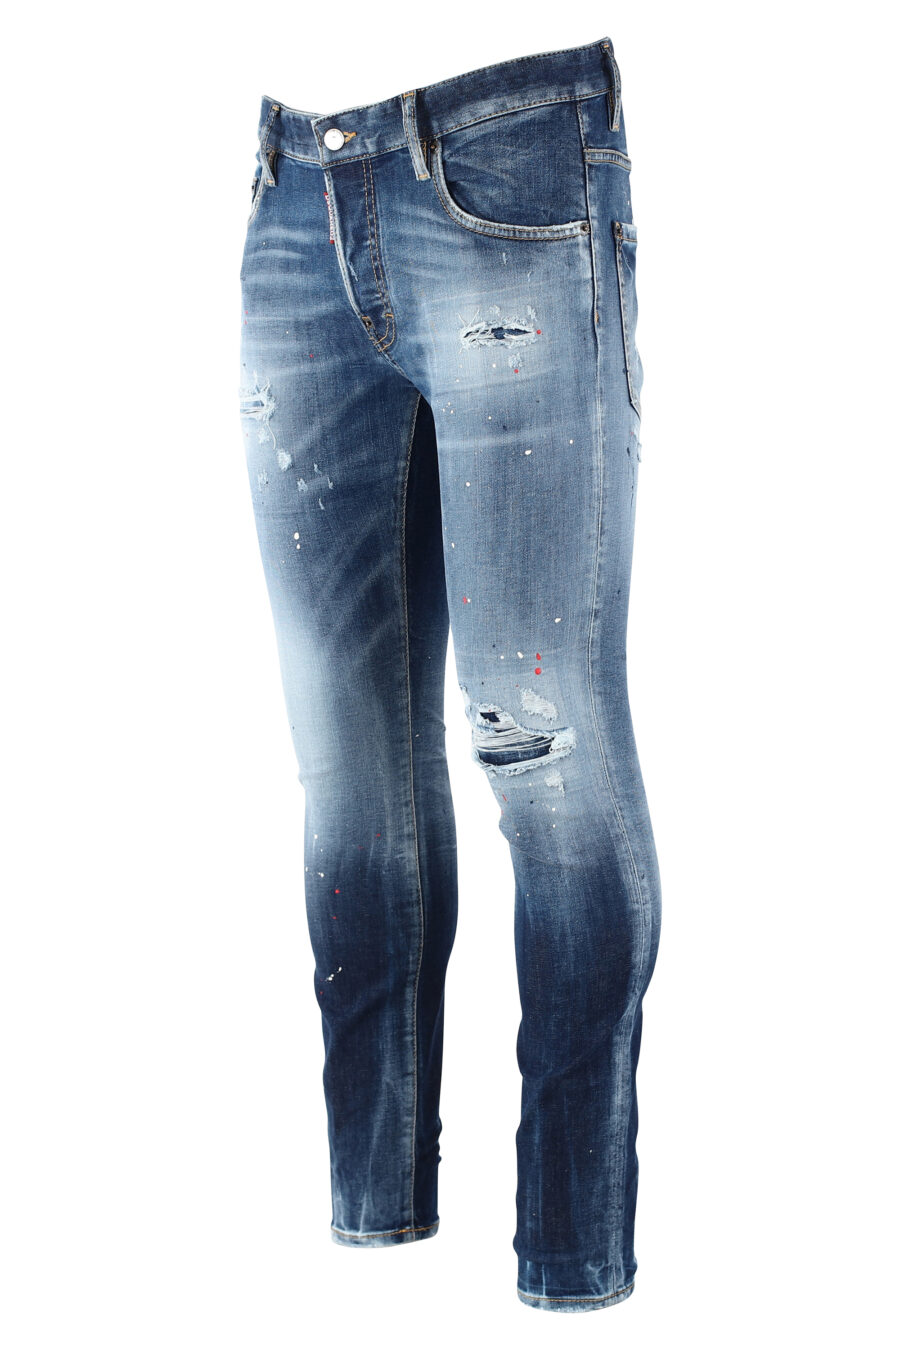 Pantalón vaquero "super twinky jean" azul desgastado con rotos - IMG 9666